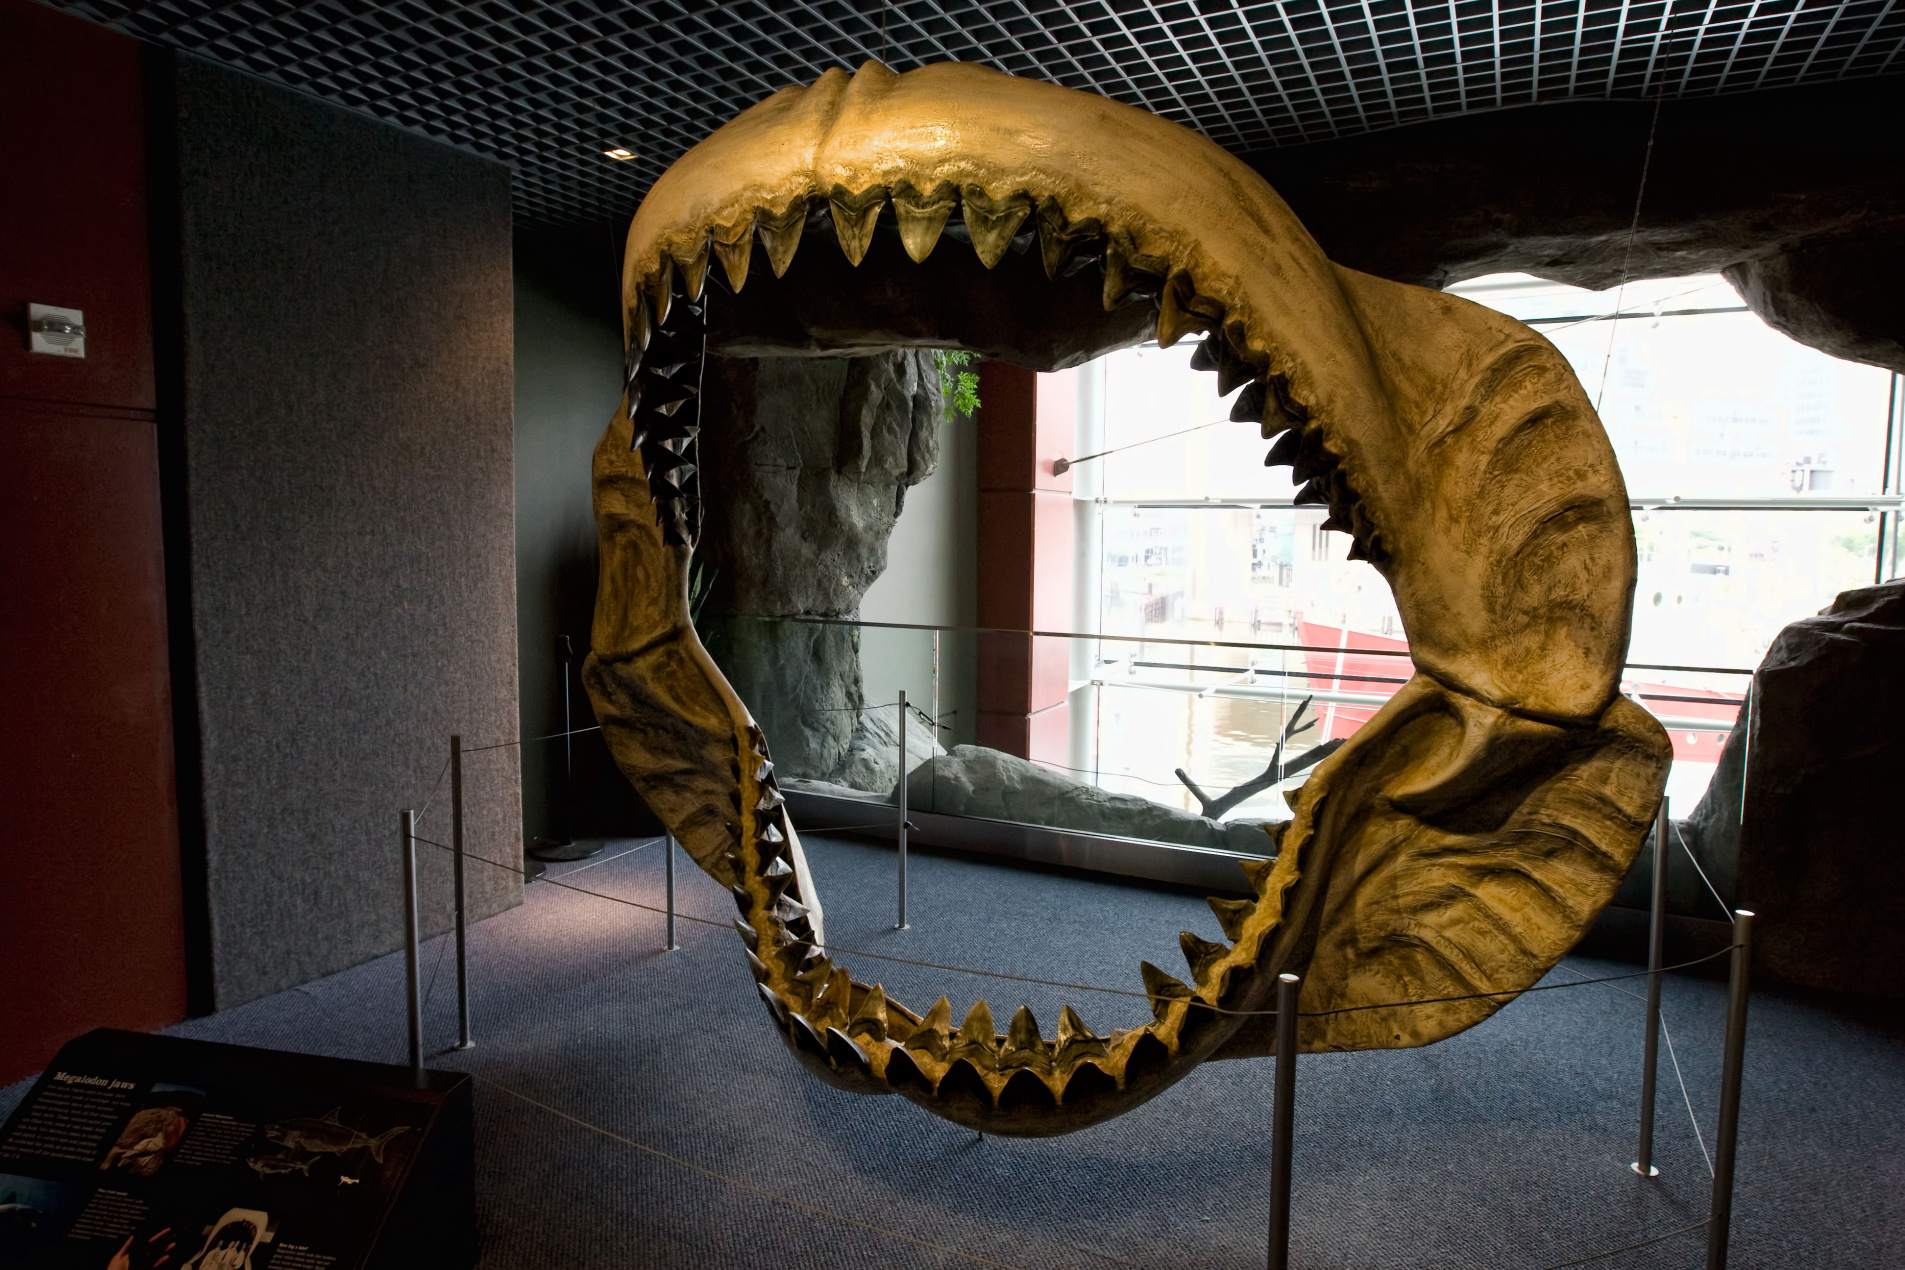 Megalodon jaws on display at the National Aquarium in Baltimore, USA.